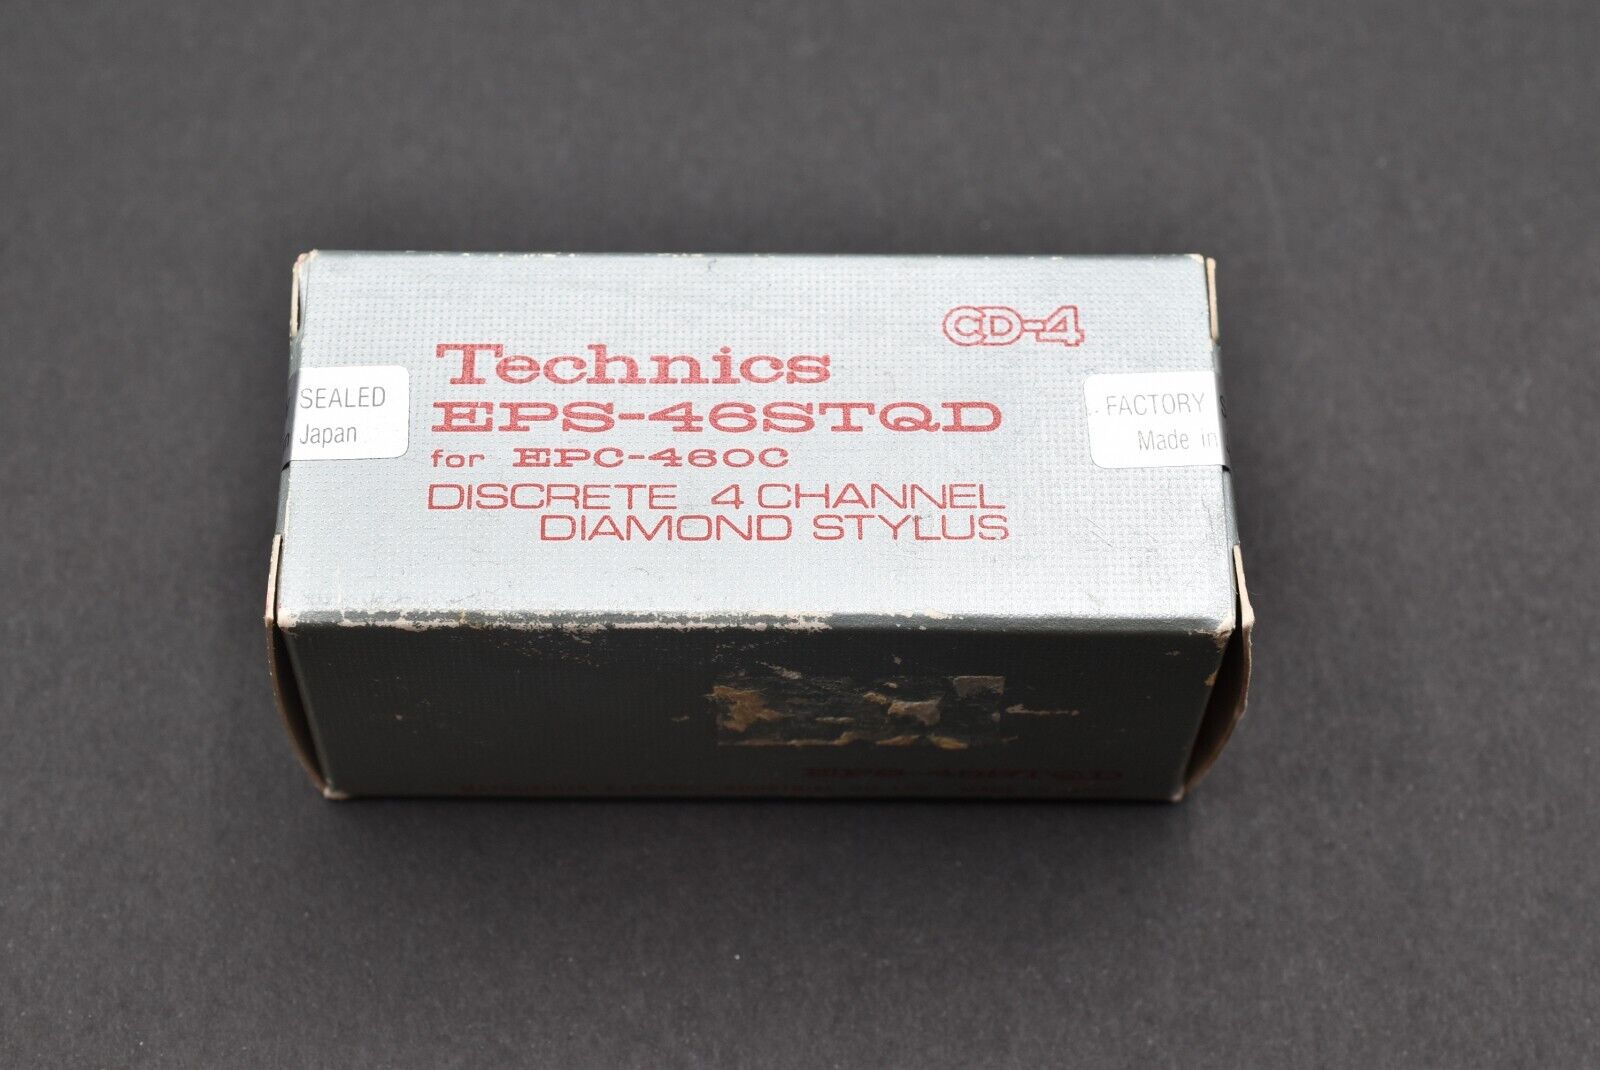 NOS! Technics EPS-46STQD Original Replacement Stylus Needle for EPC-460C 4ch CD4